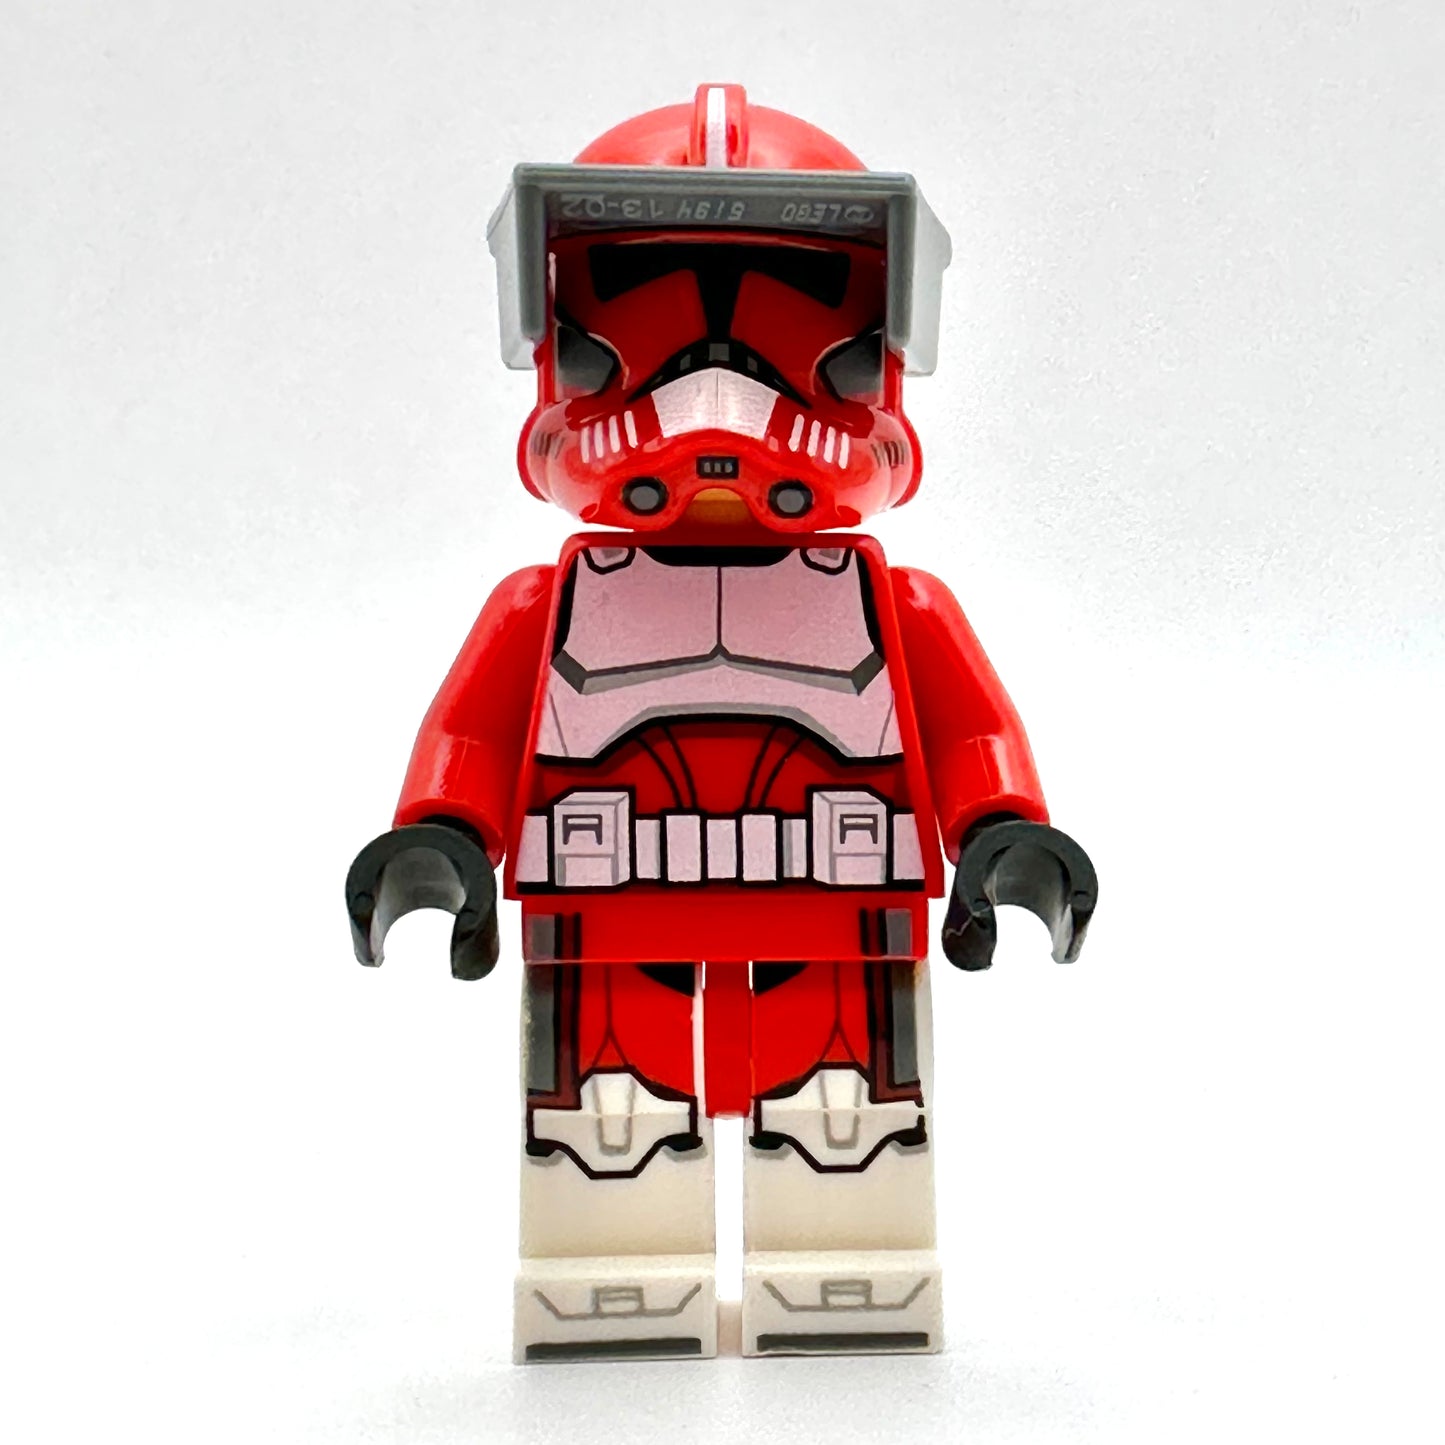 LEGO Phase 2 Commander Fox Clone Trooper Minifigure